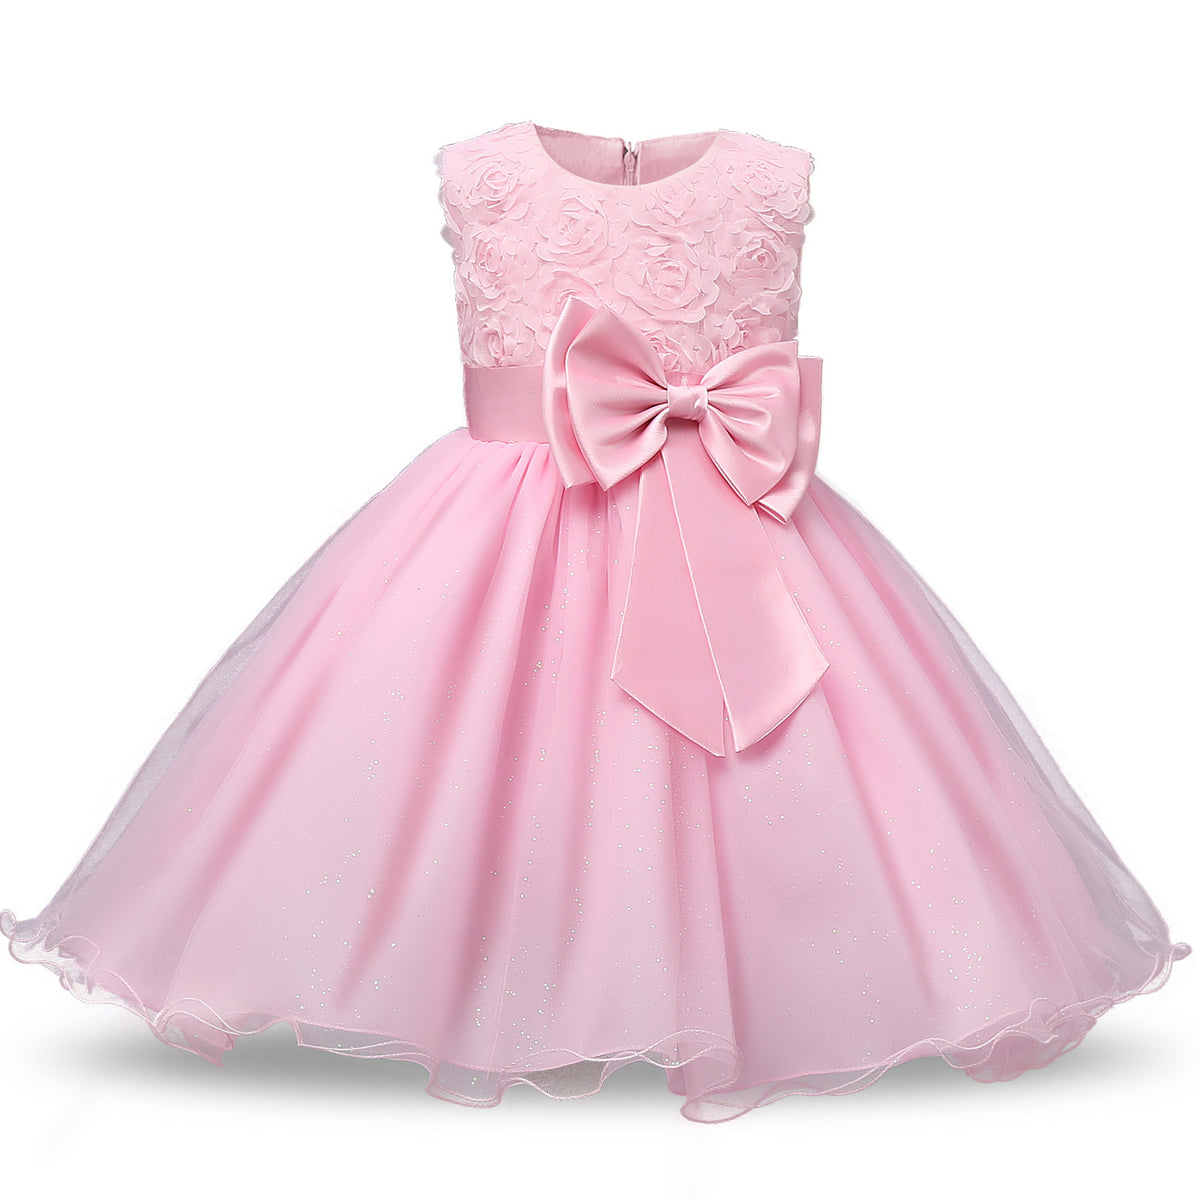 Rose child dress dress